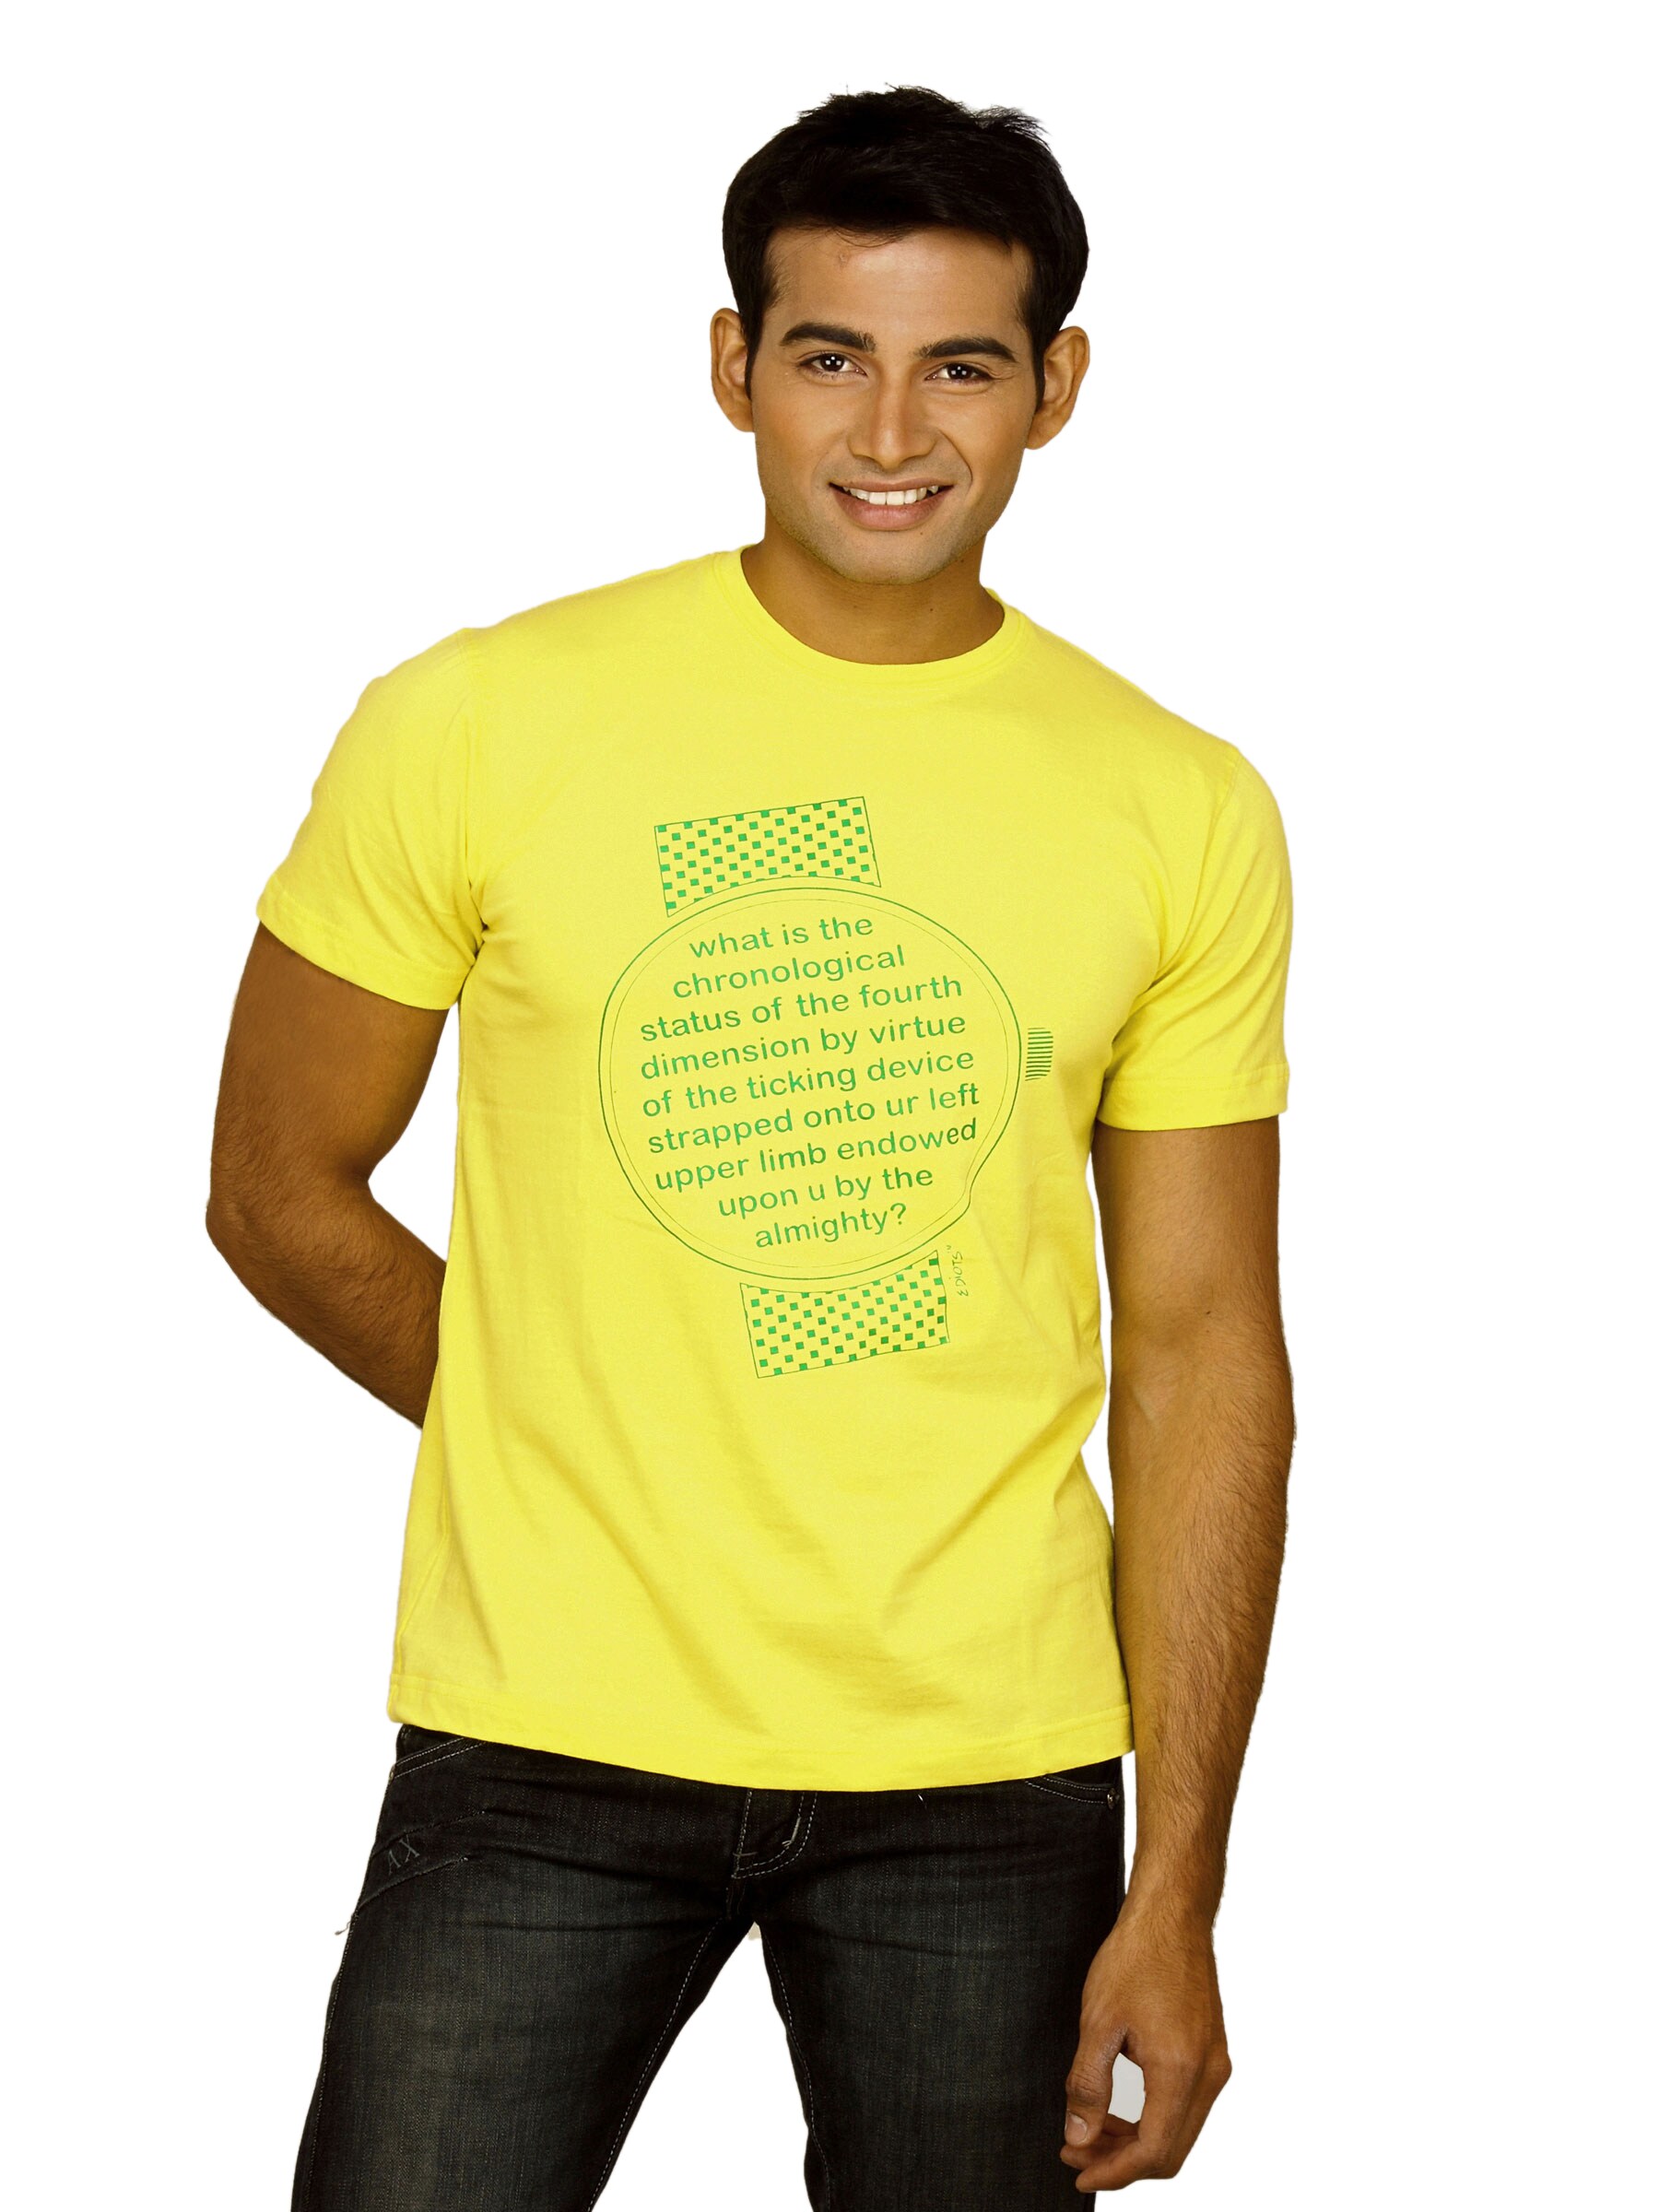 Ediots Men's Chronological Status Yellow T-shirt